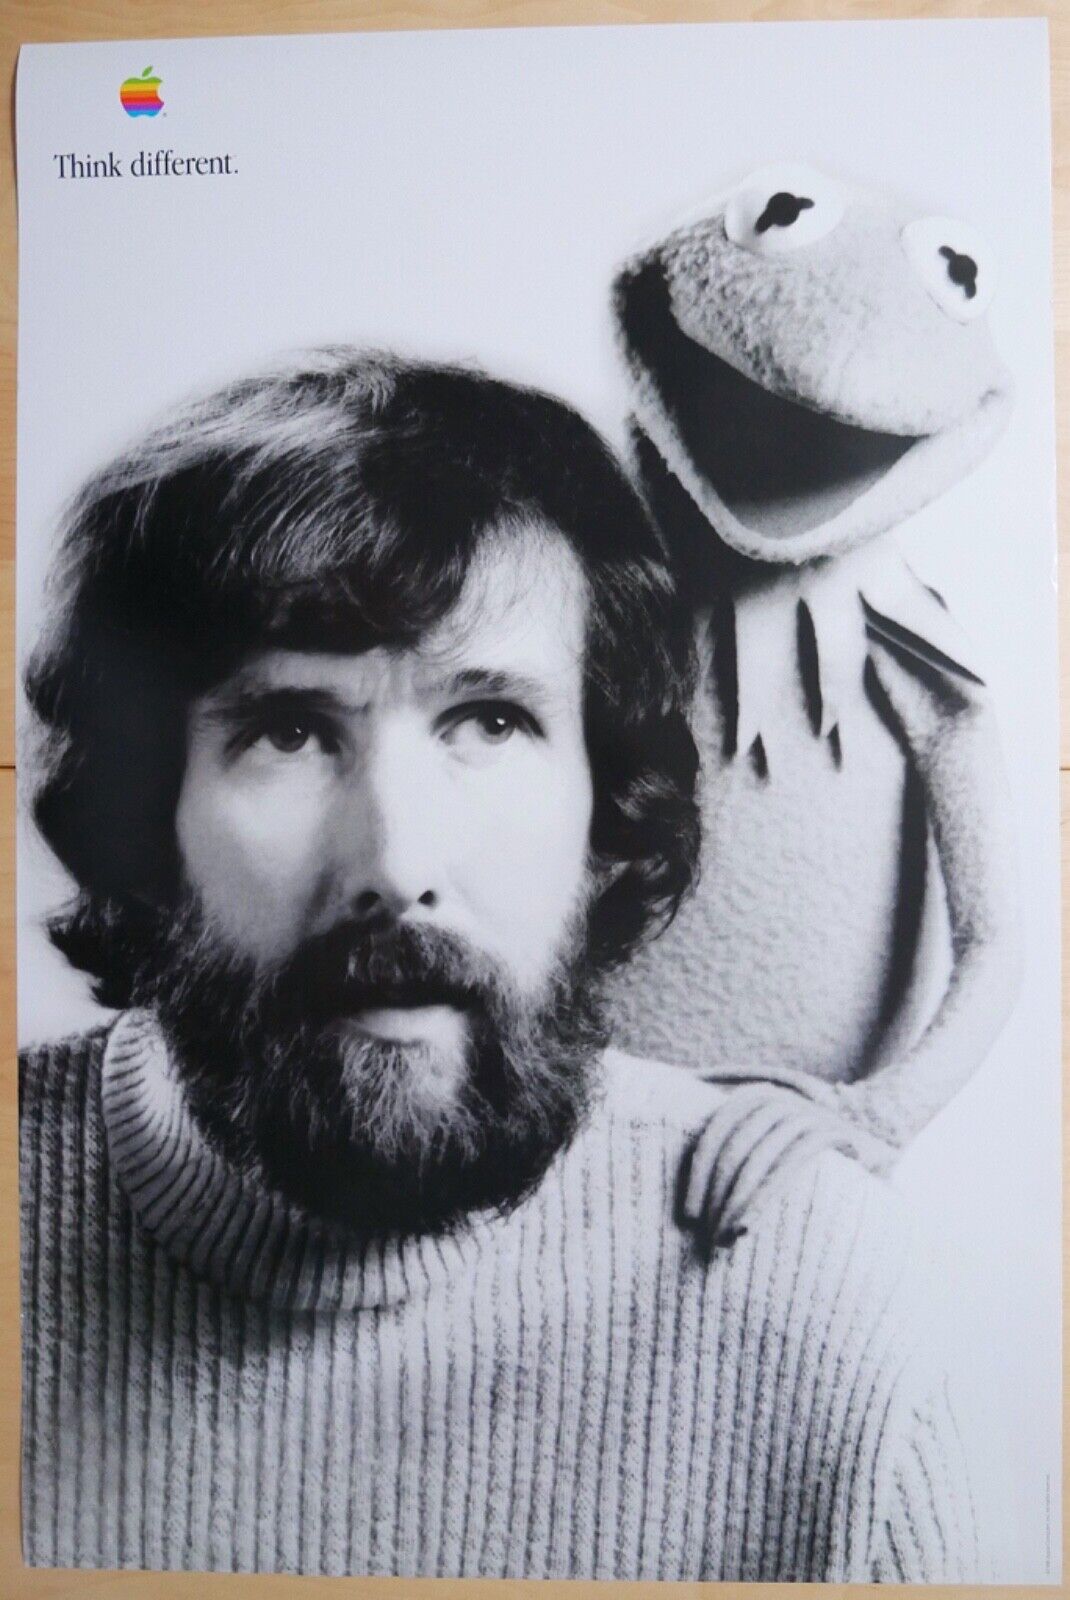 Vintage Apple Think Different Poster  - Jim Henson & Kermit